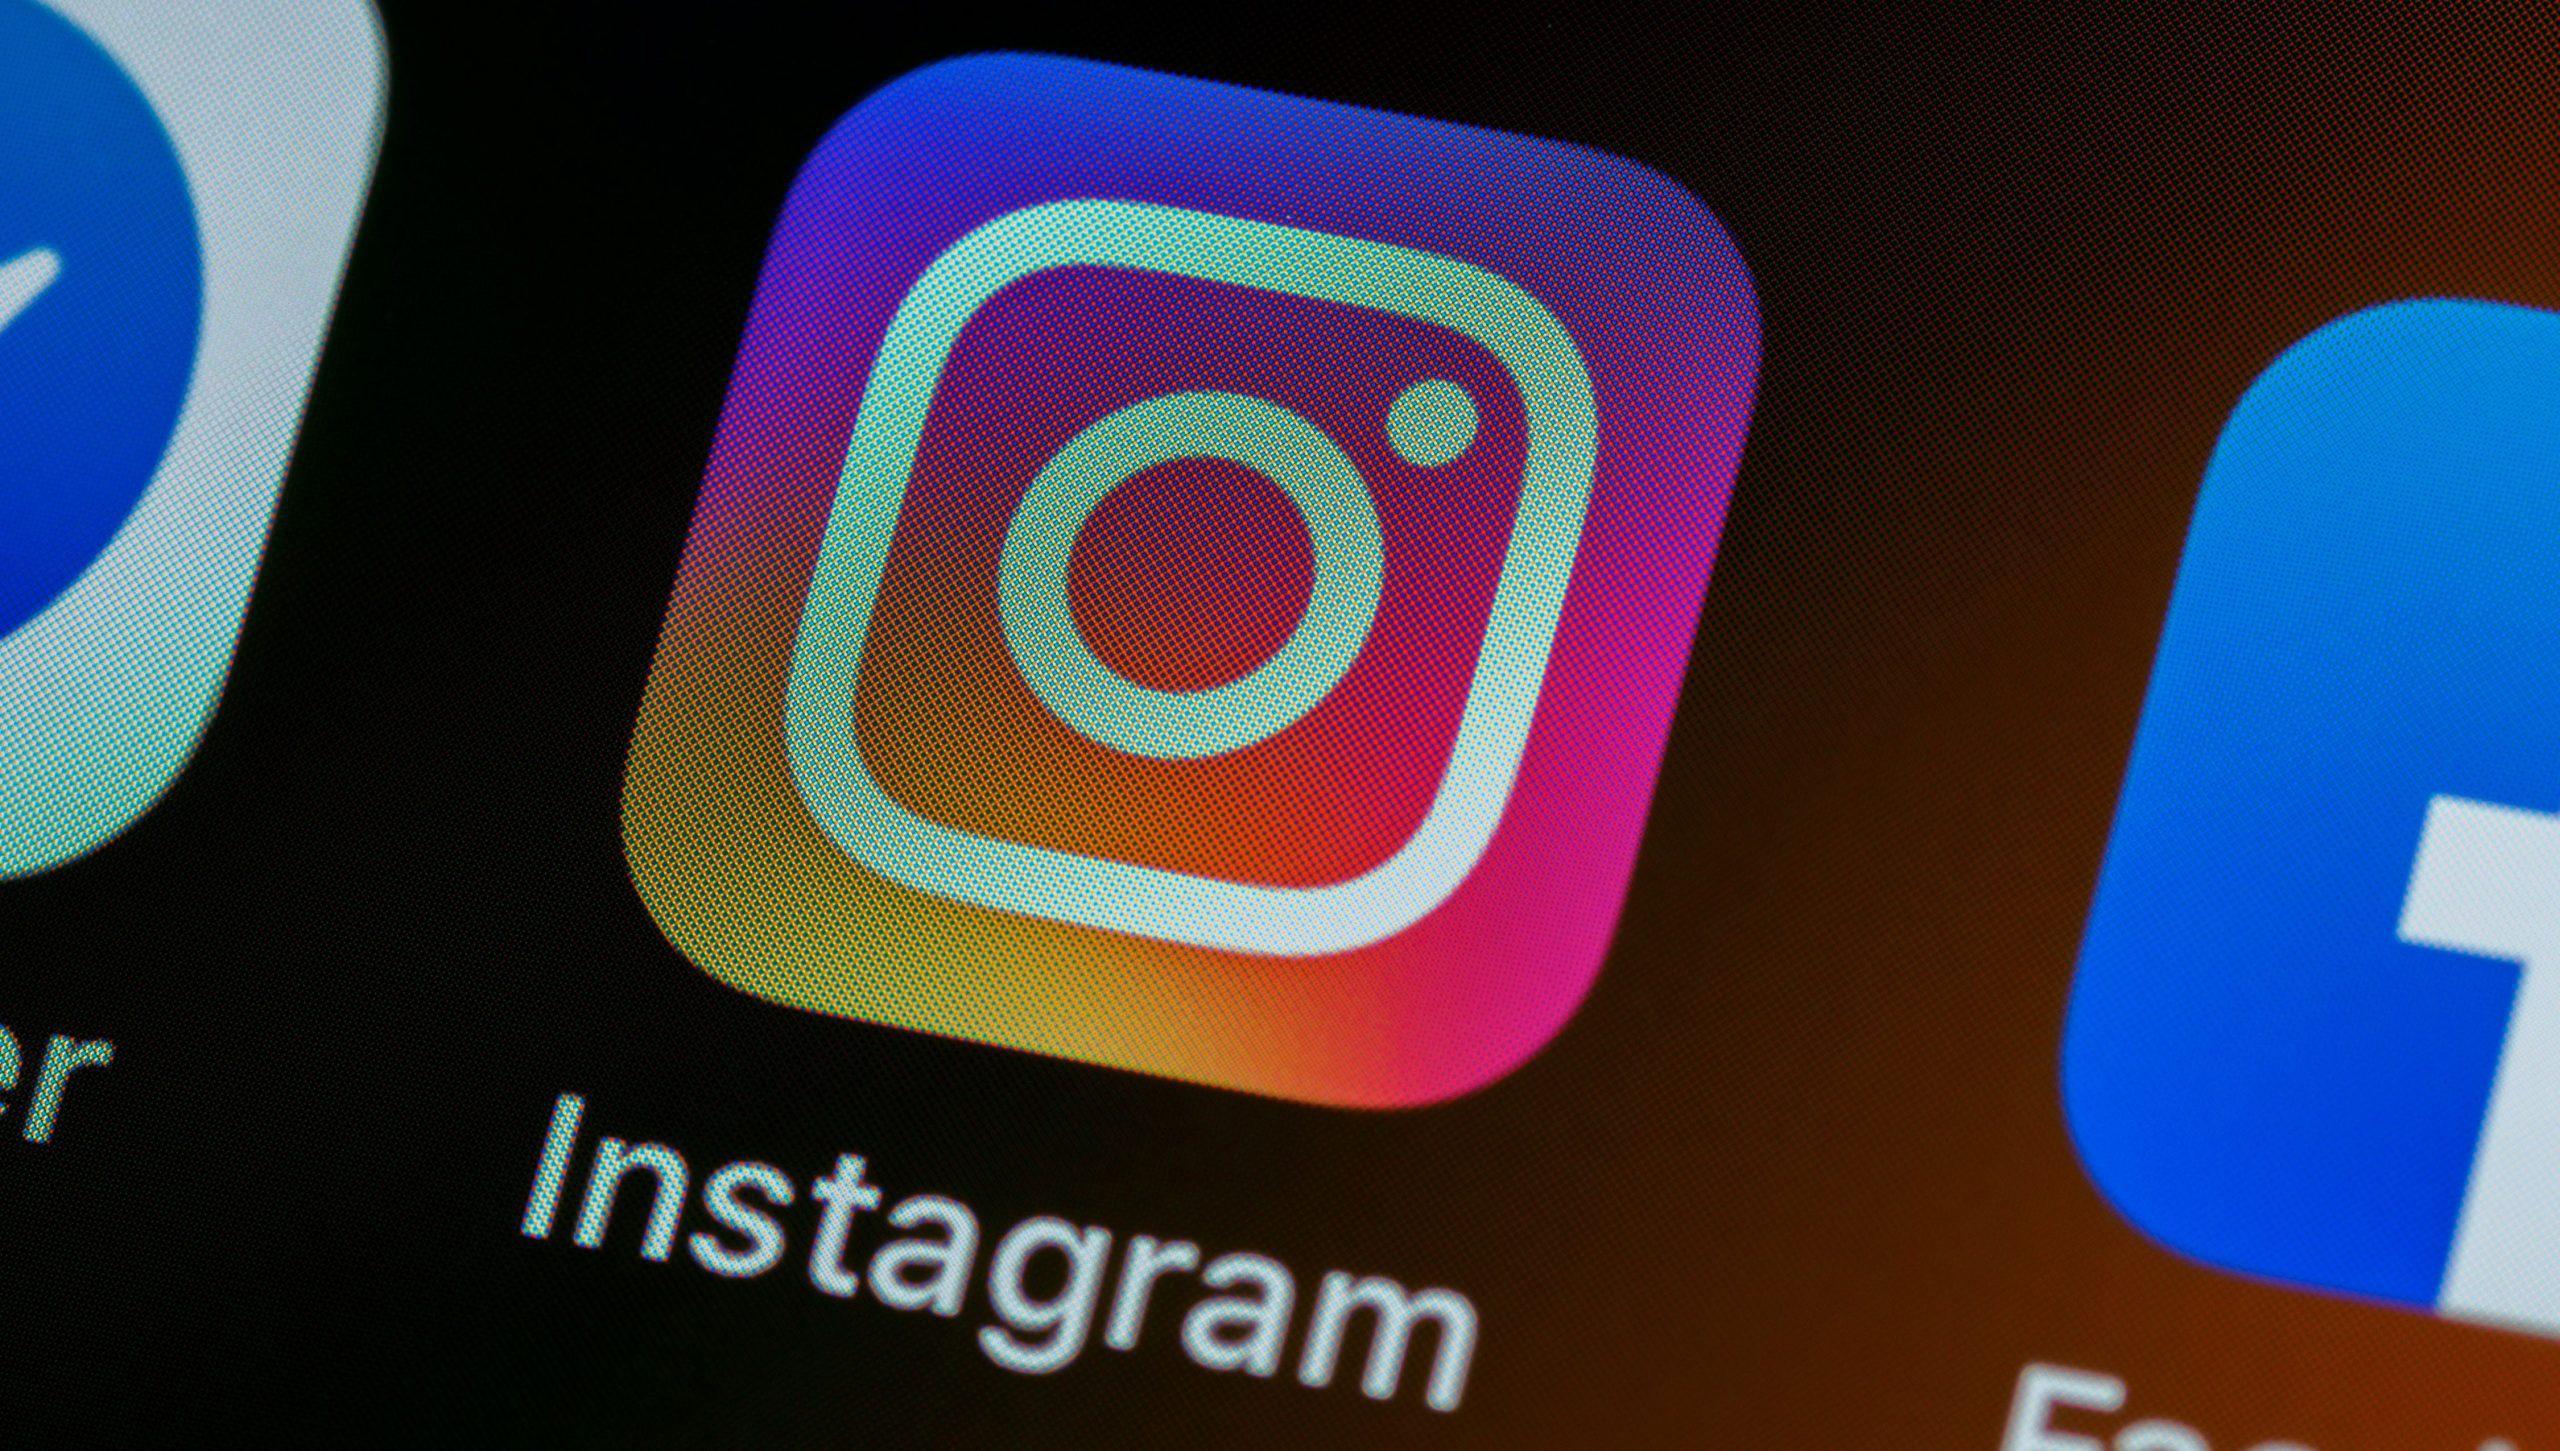 Instagram logo displayed on a smartphone.